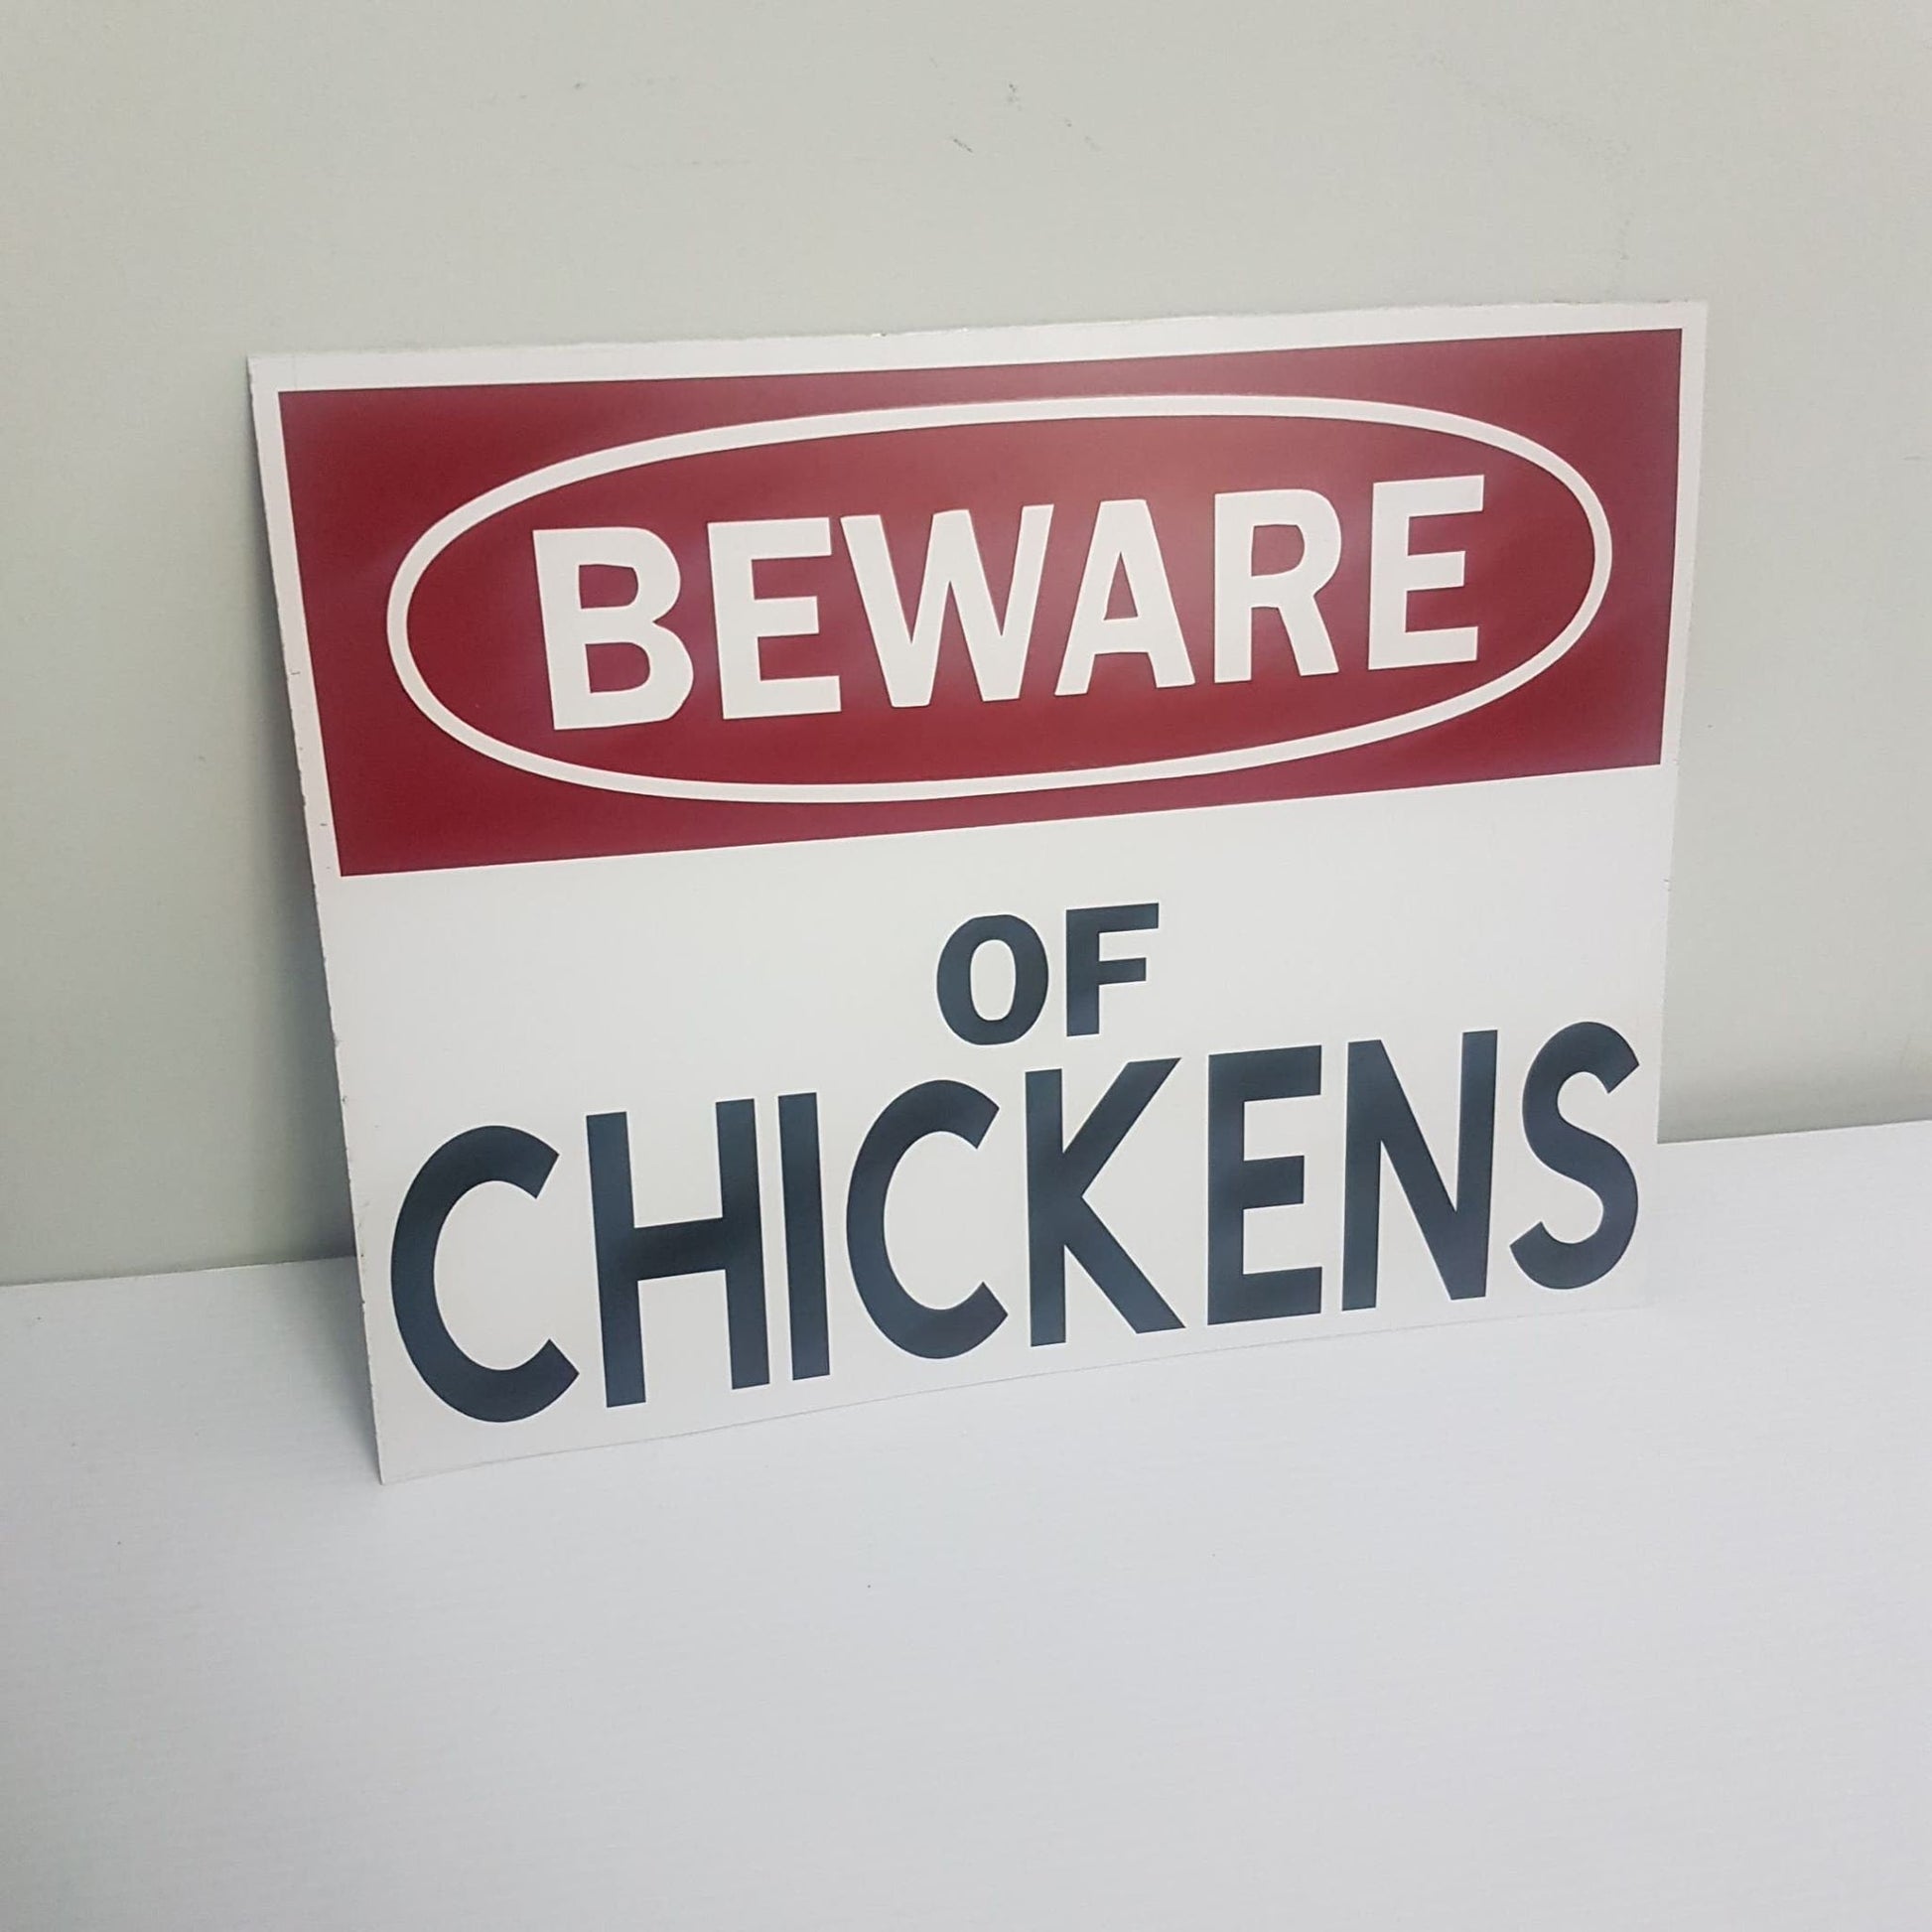 warning quackheads duck sign farm sign